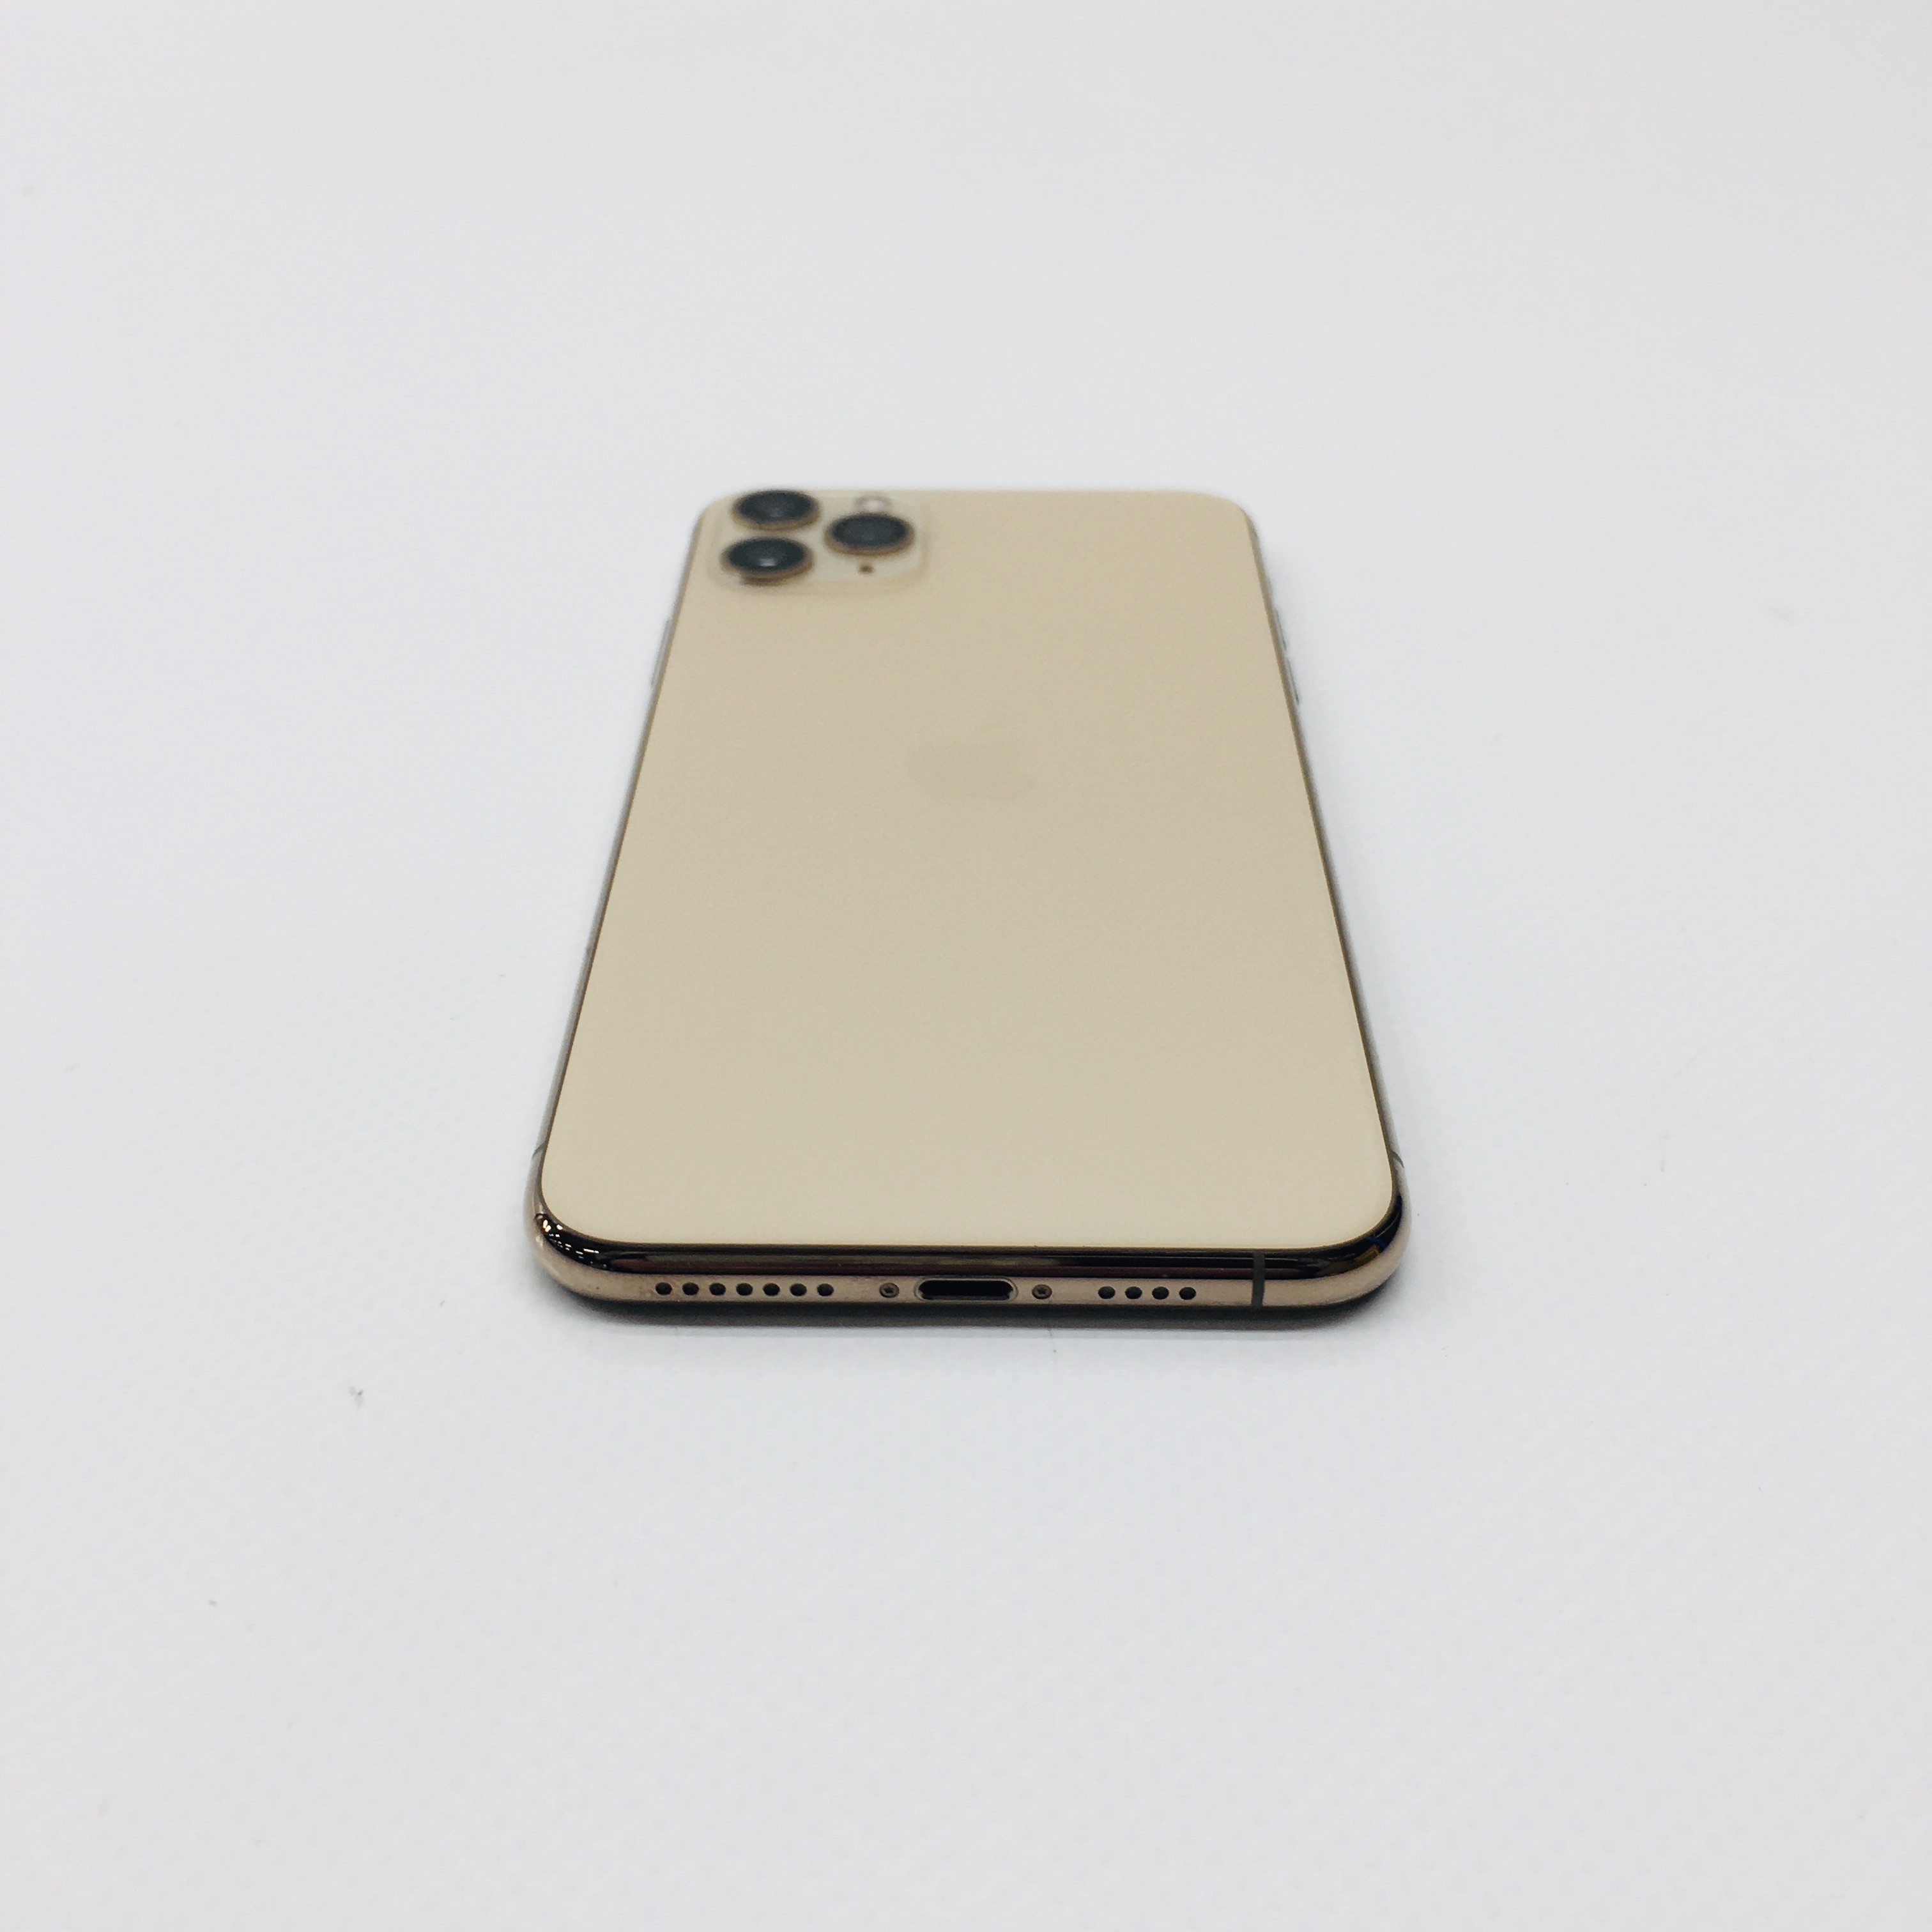 iPhone 11 Pro Max 256GB, 256GB, Gold, image 3